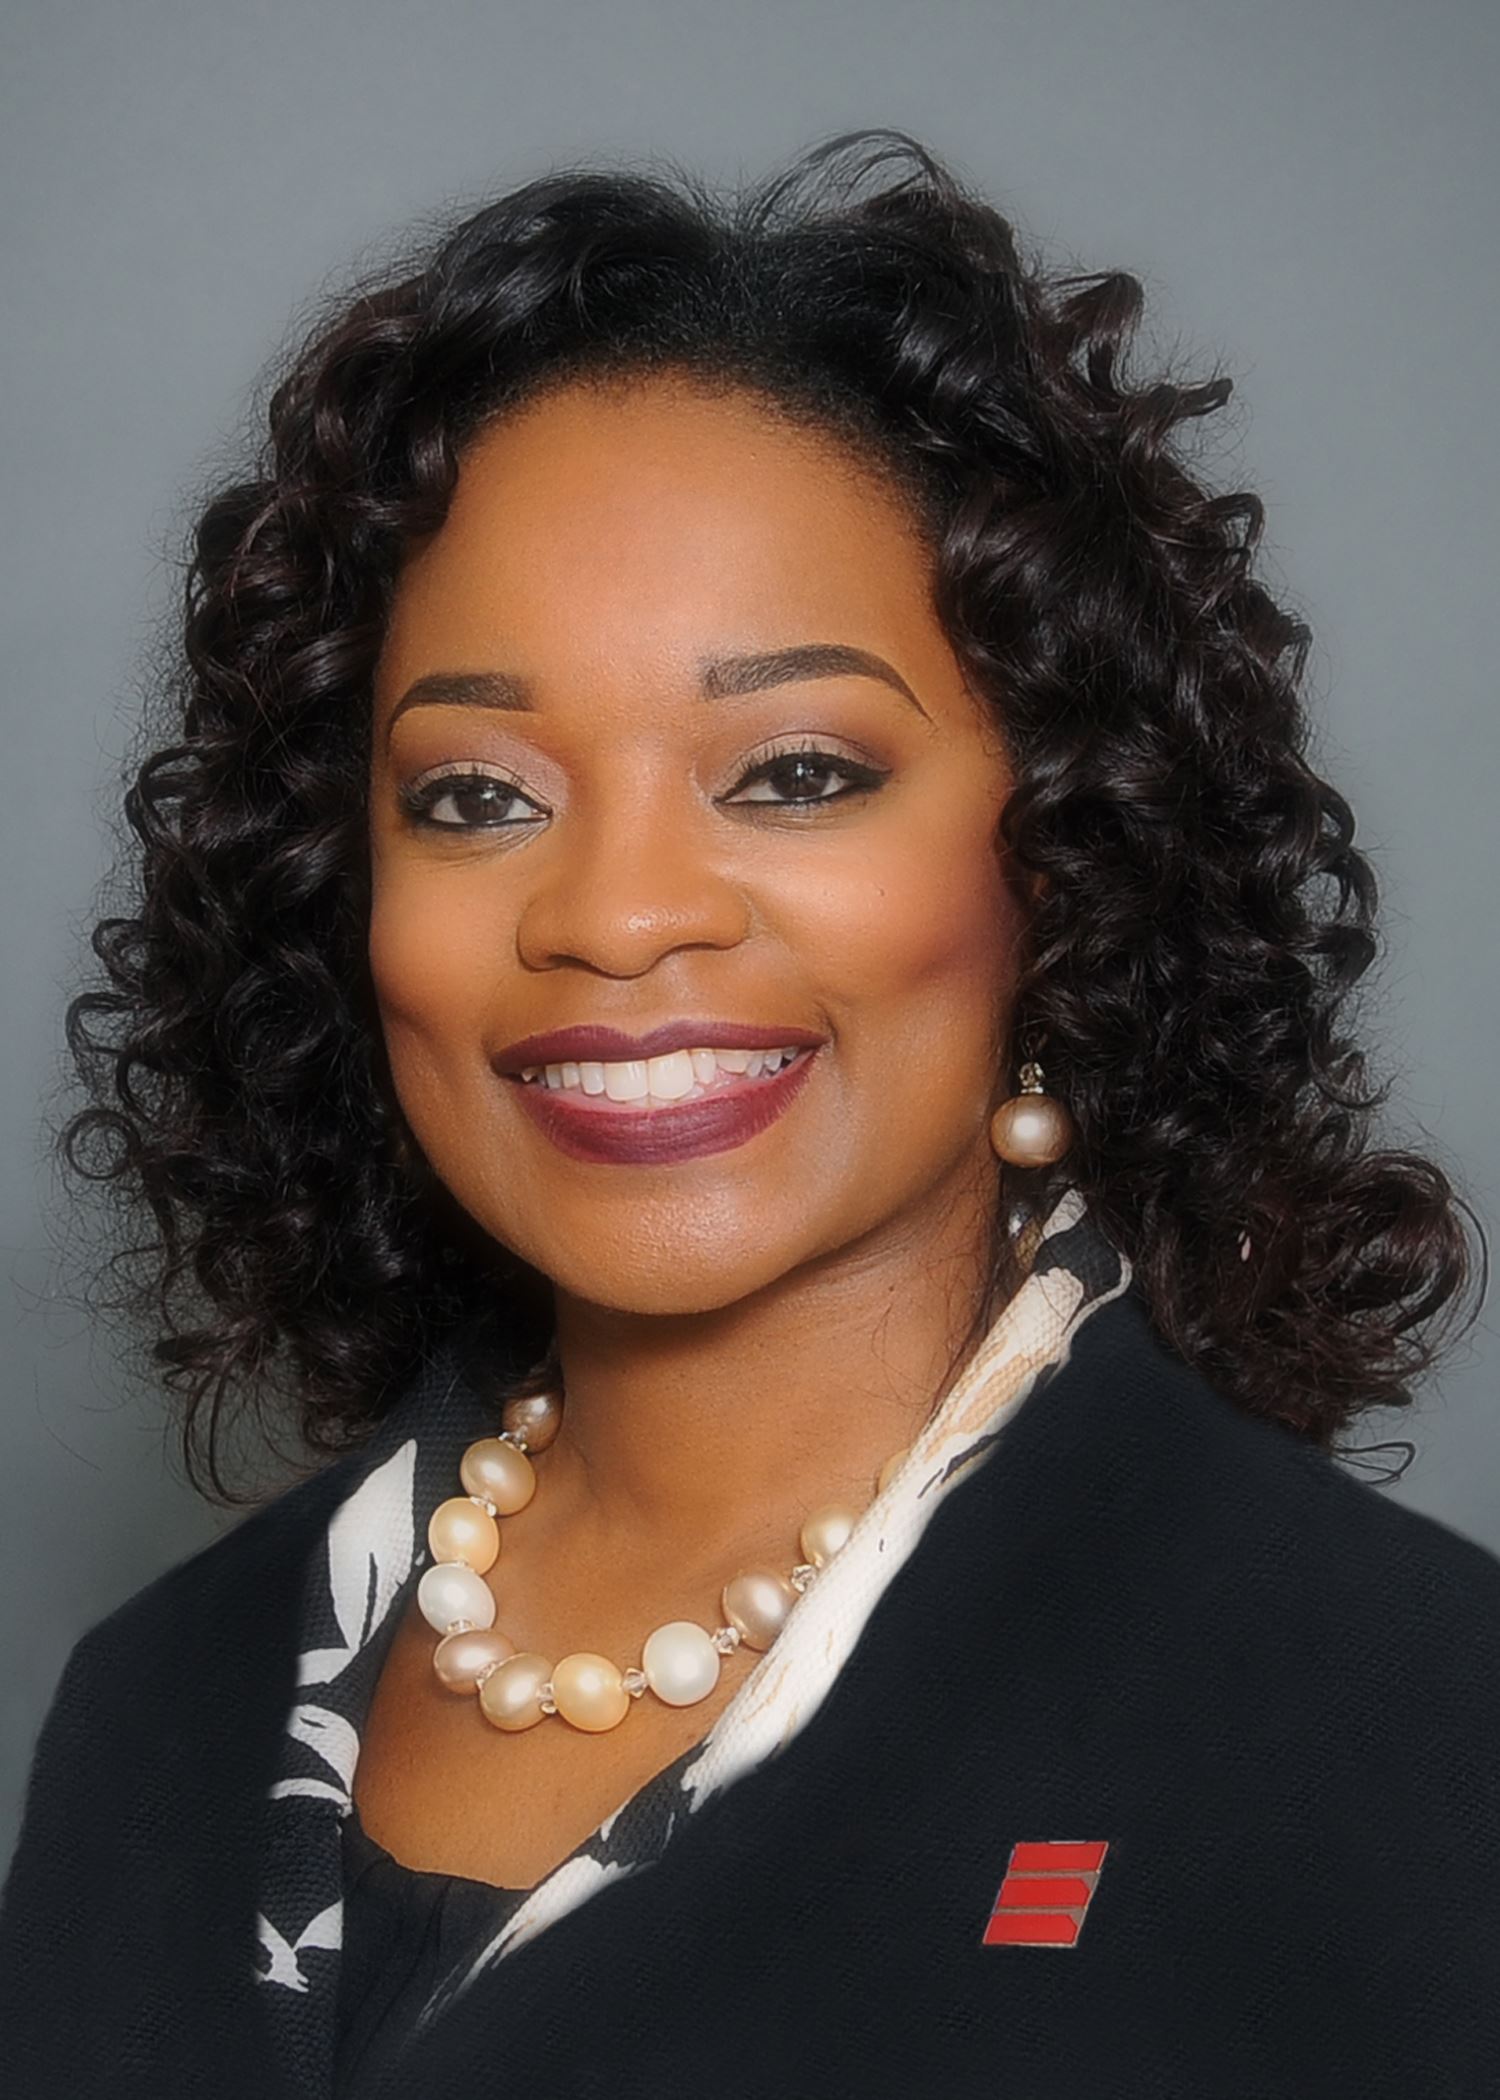 Dr. Takeisha Davis